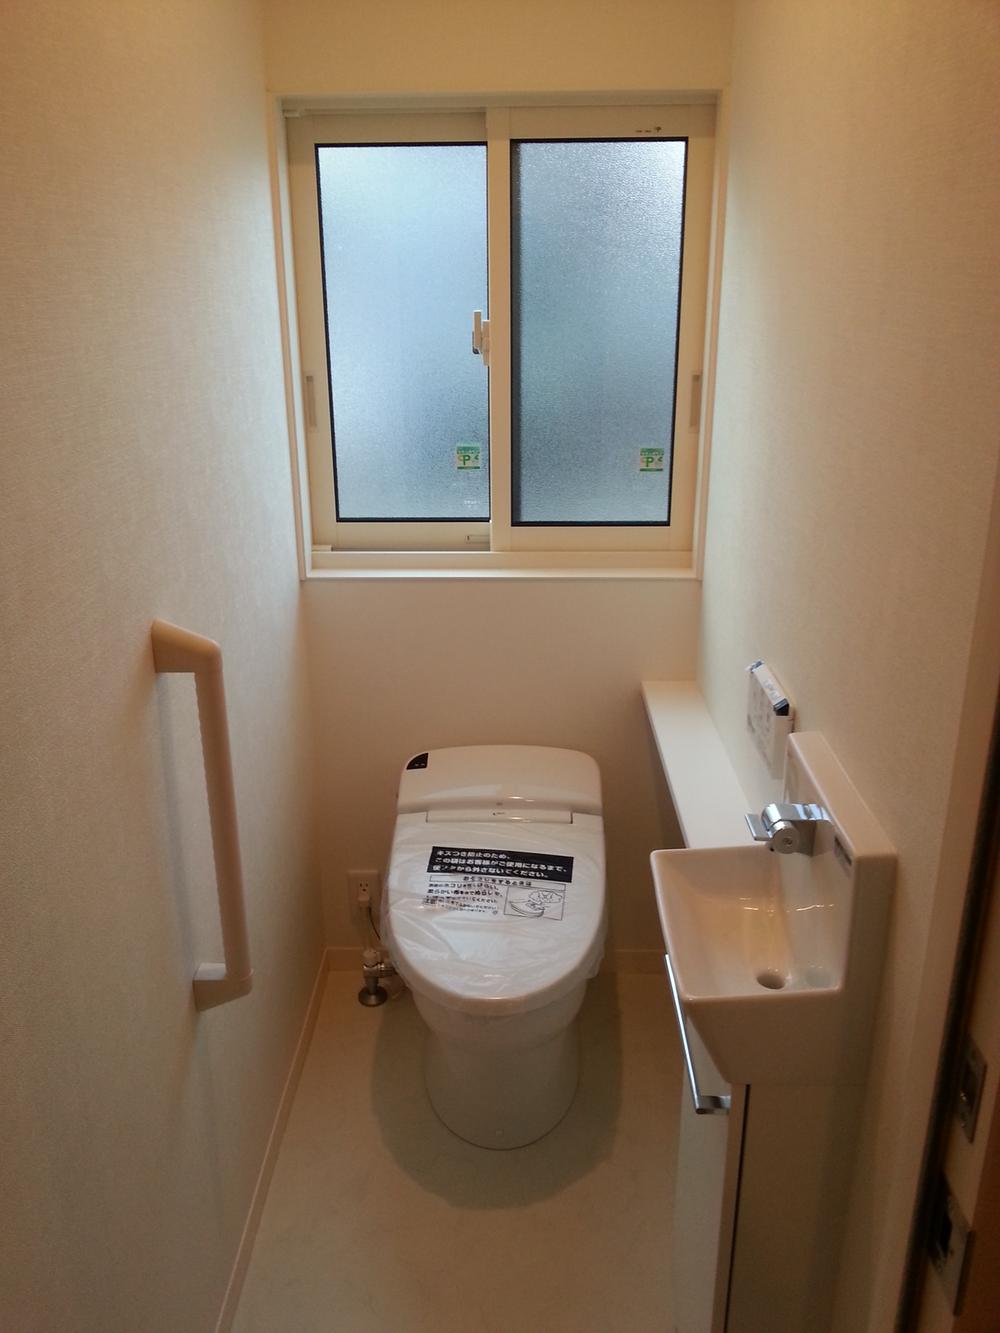 Toilet. It is spacious space. 